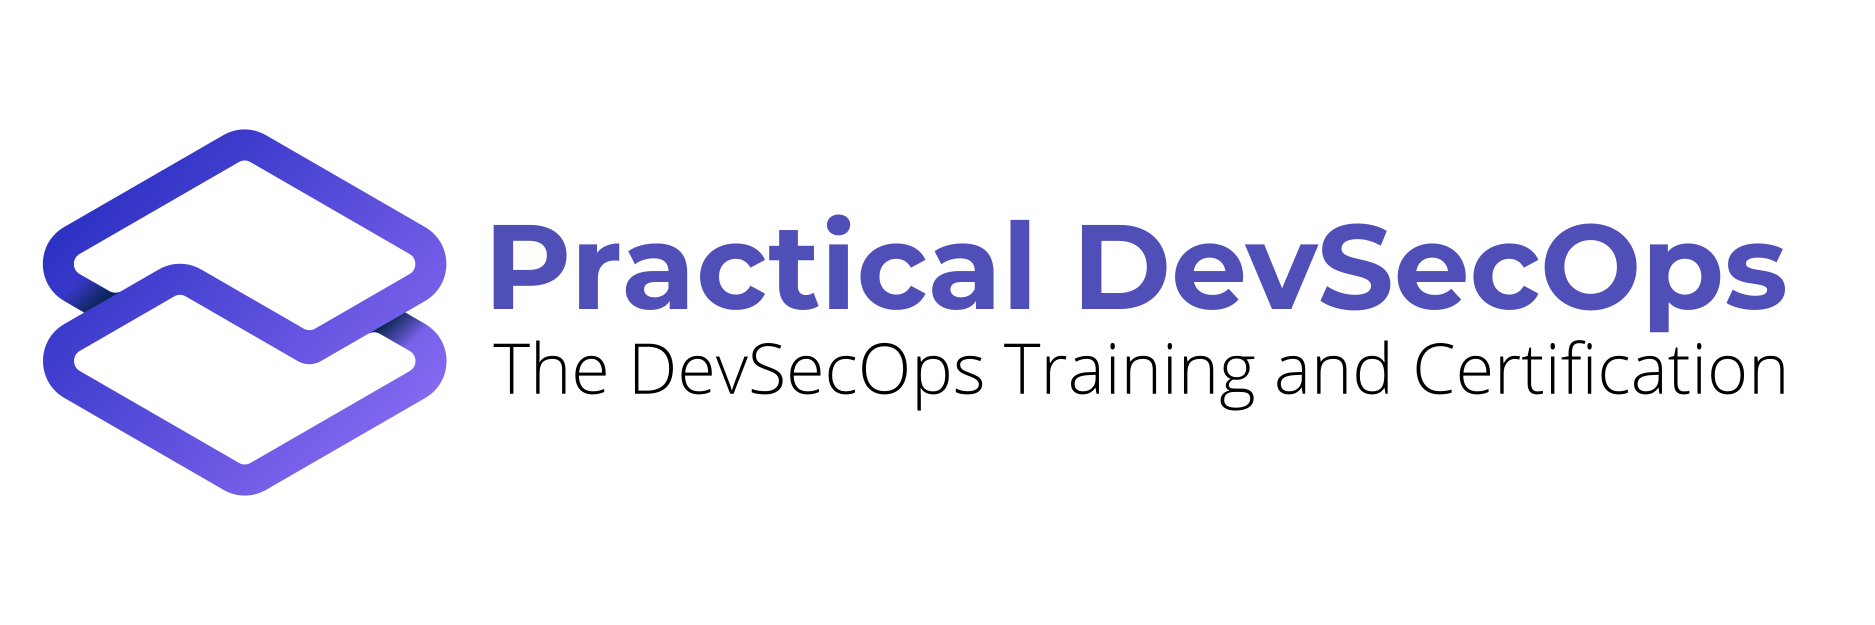 practical-devsecops-logo.png